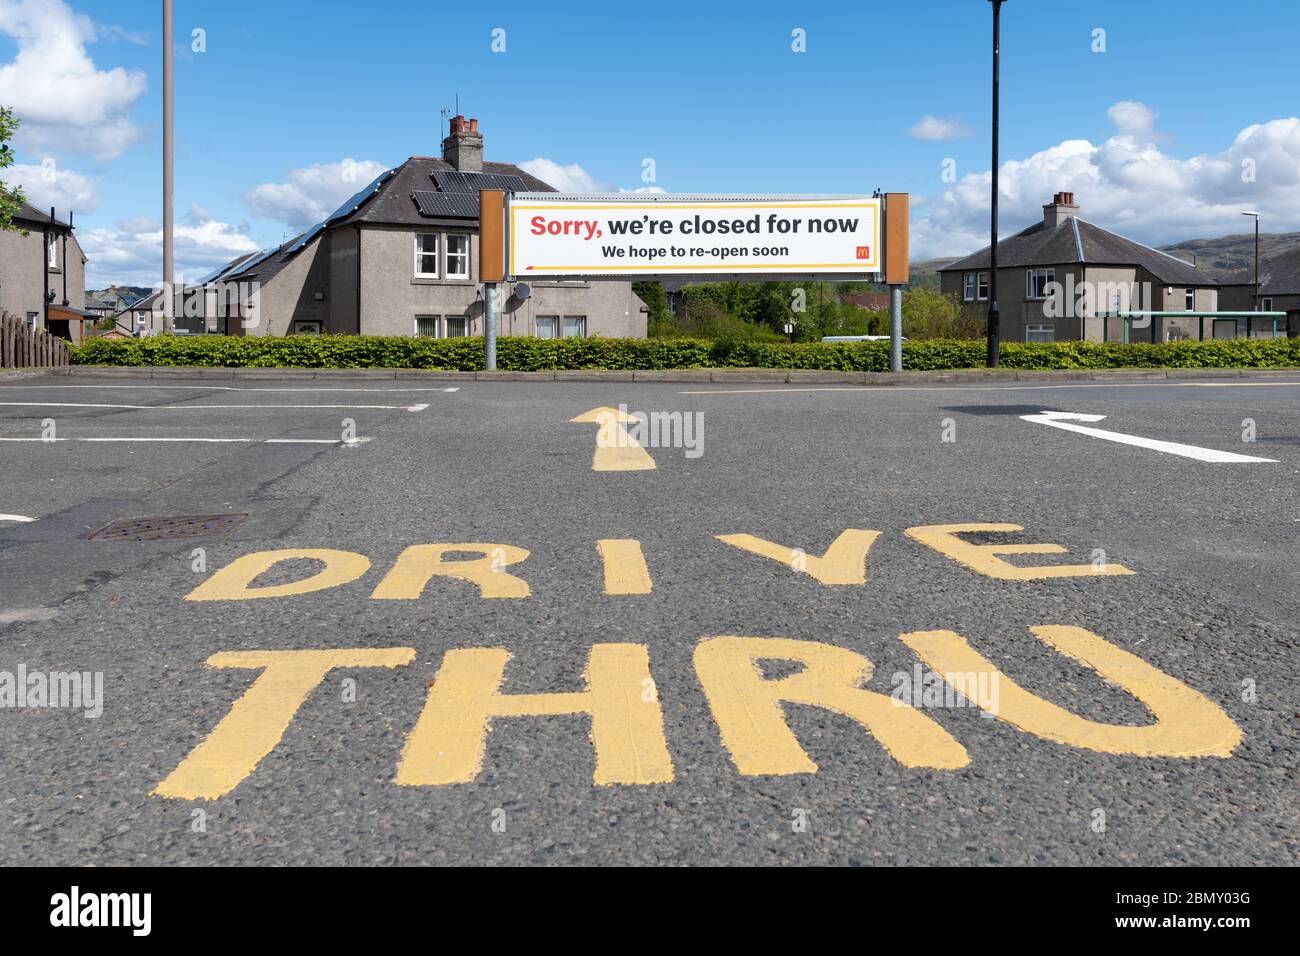 McDonald's drive thru closed sign during the coronavirus pandemic lockdown, Stirling, Scotland, UK Stock Photo